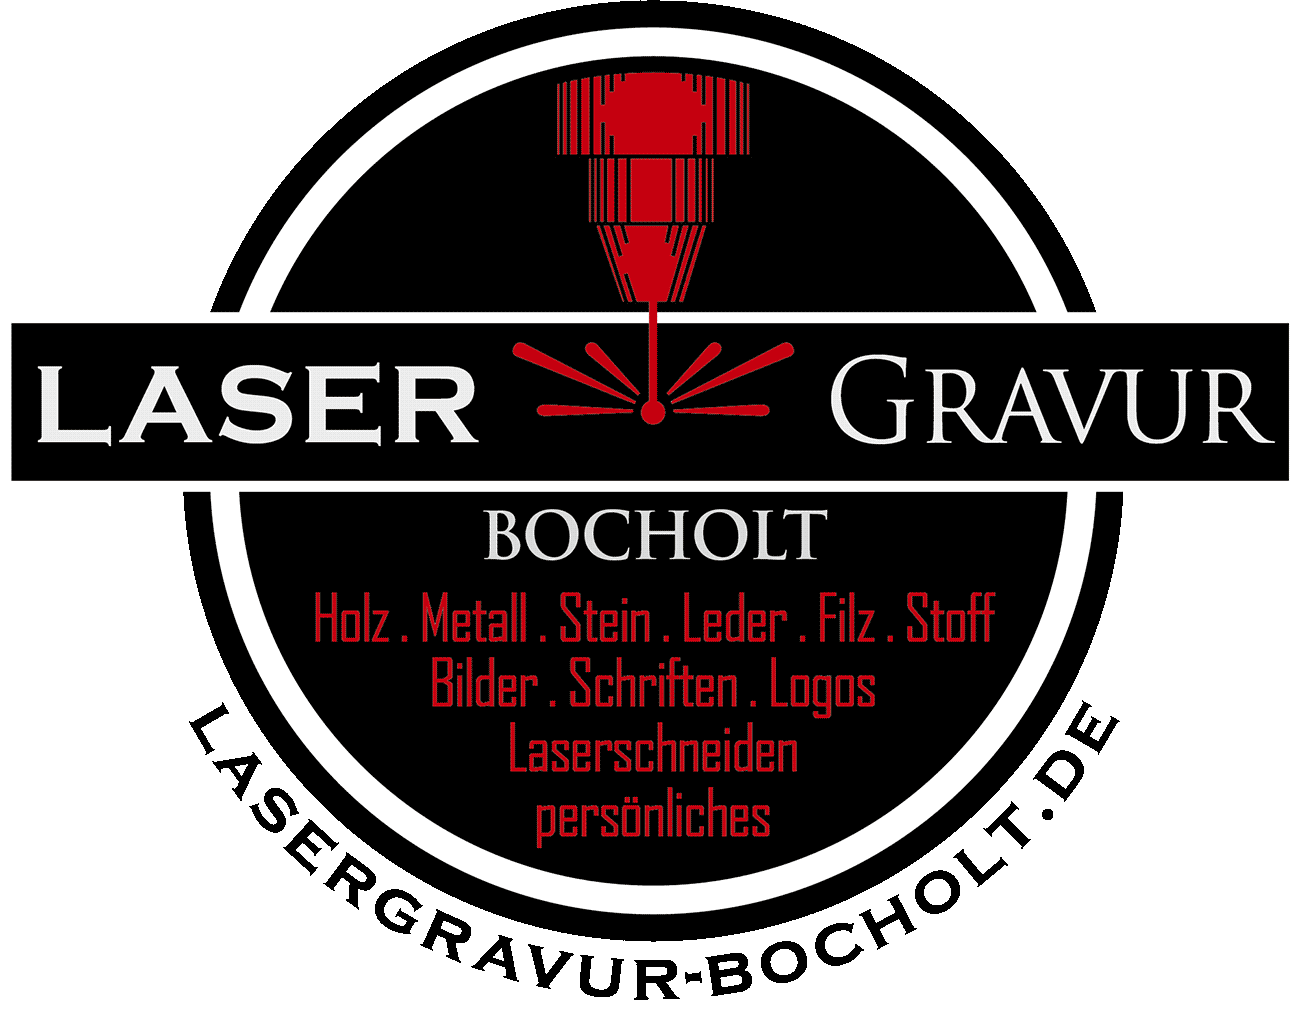 Lasergravur Bocholt